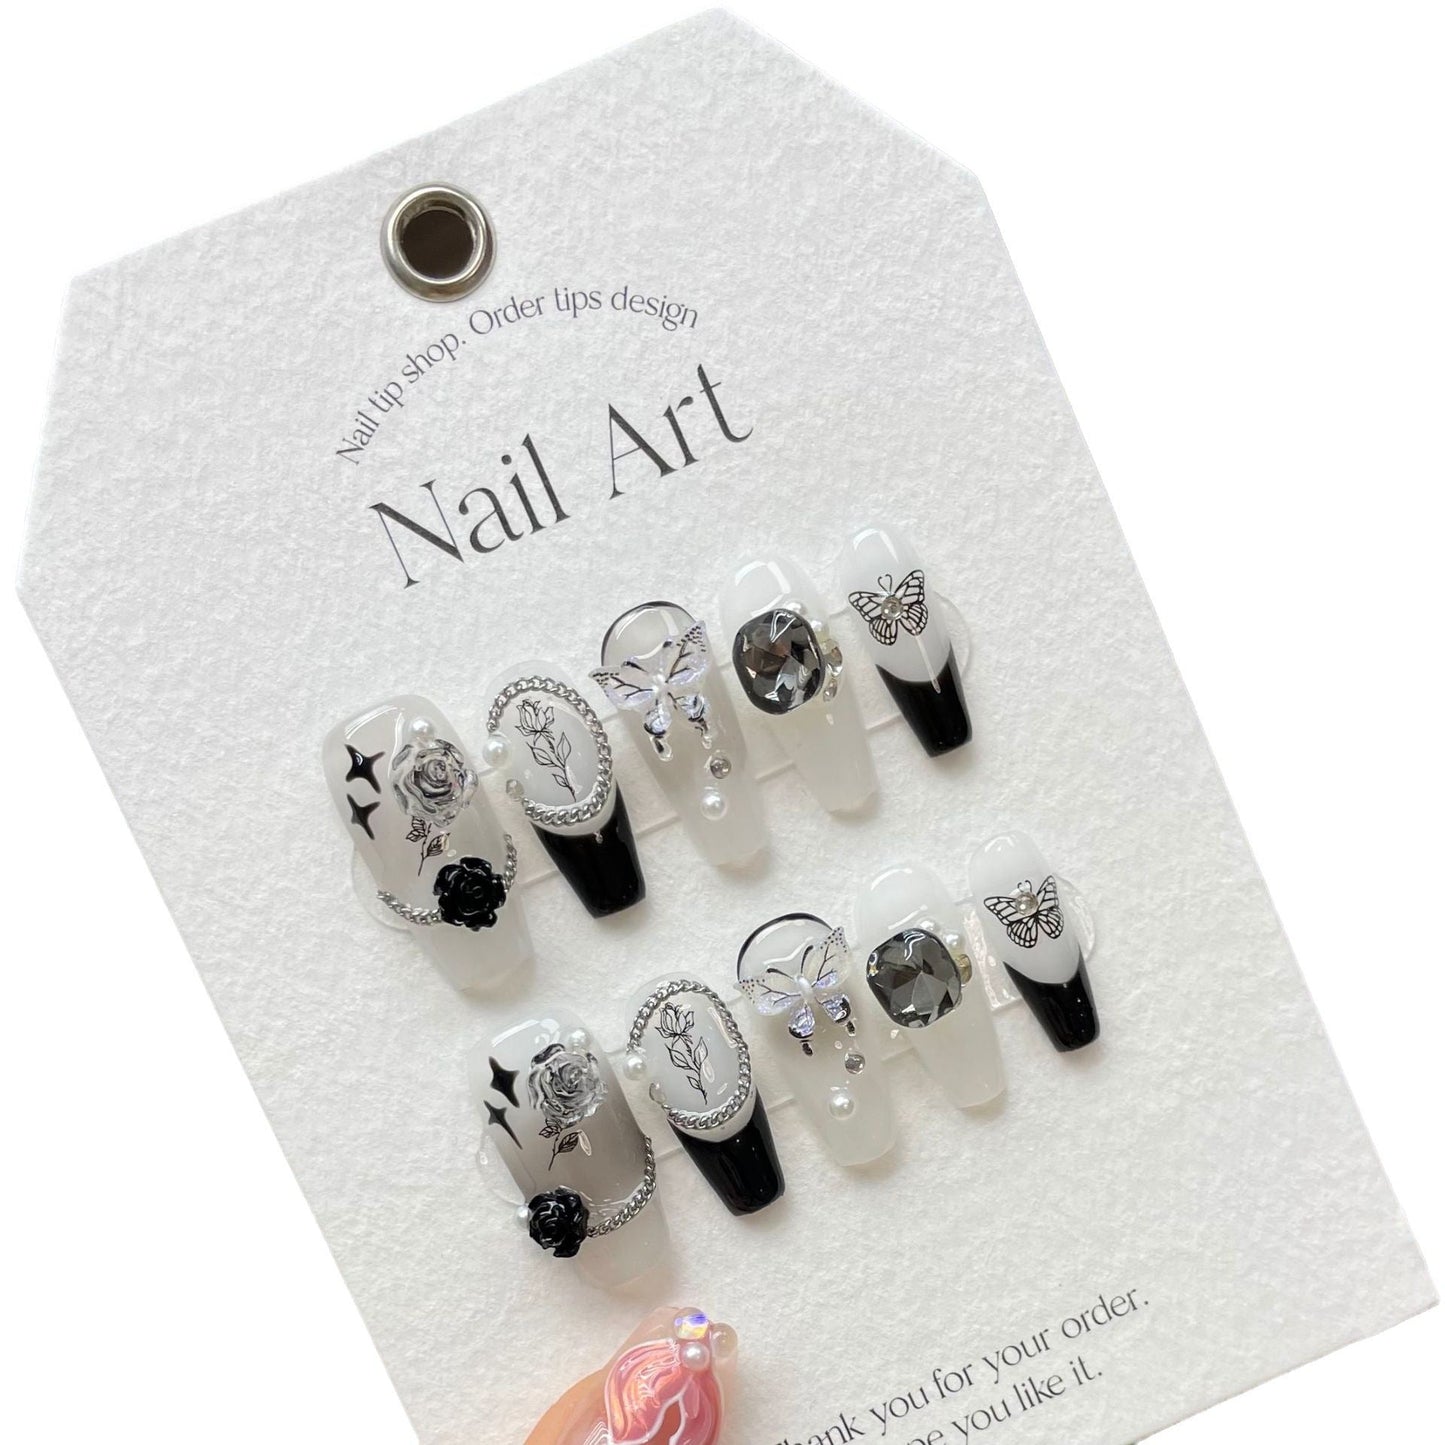 891 Butterfly flower style press on nails 100% handmade false nails white black